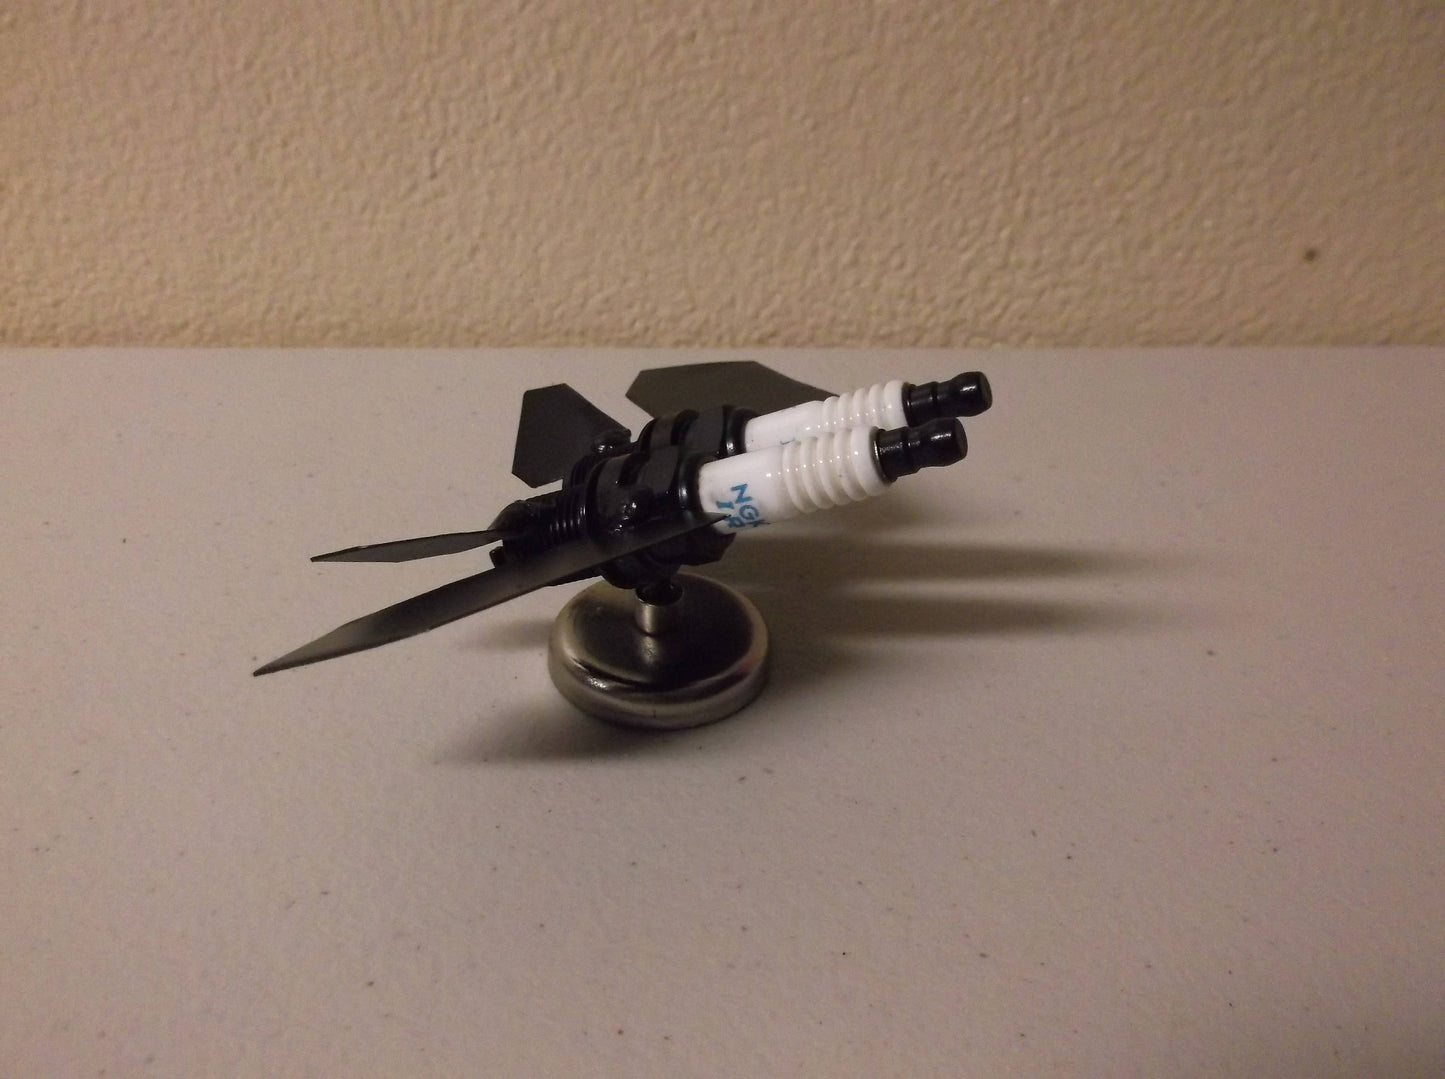 Twin Jet Airplane, Spark Plug Magnet, Metal Recycle Art